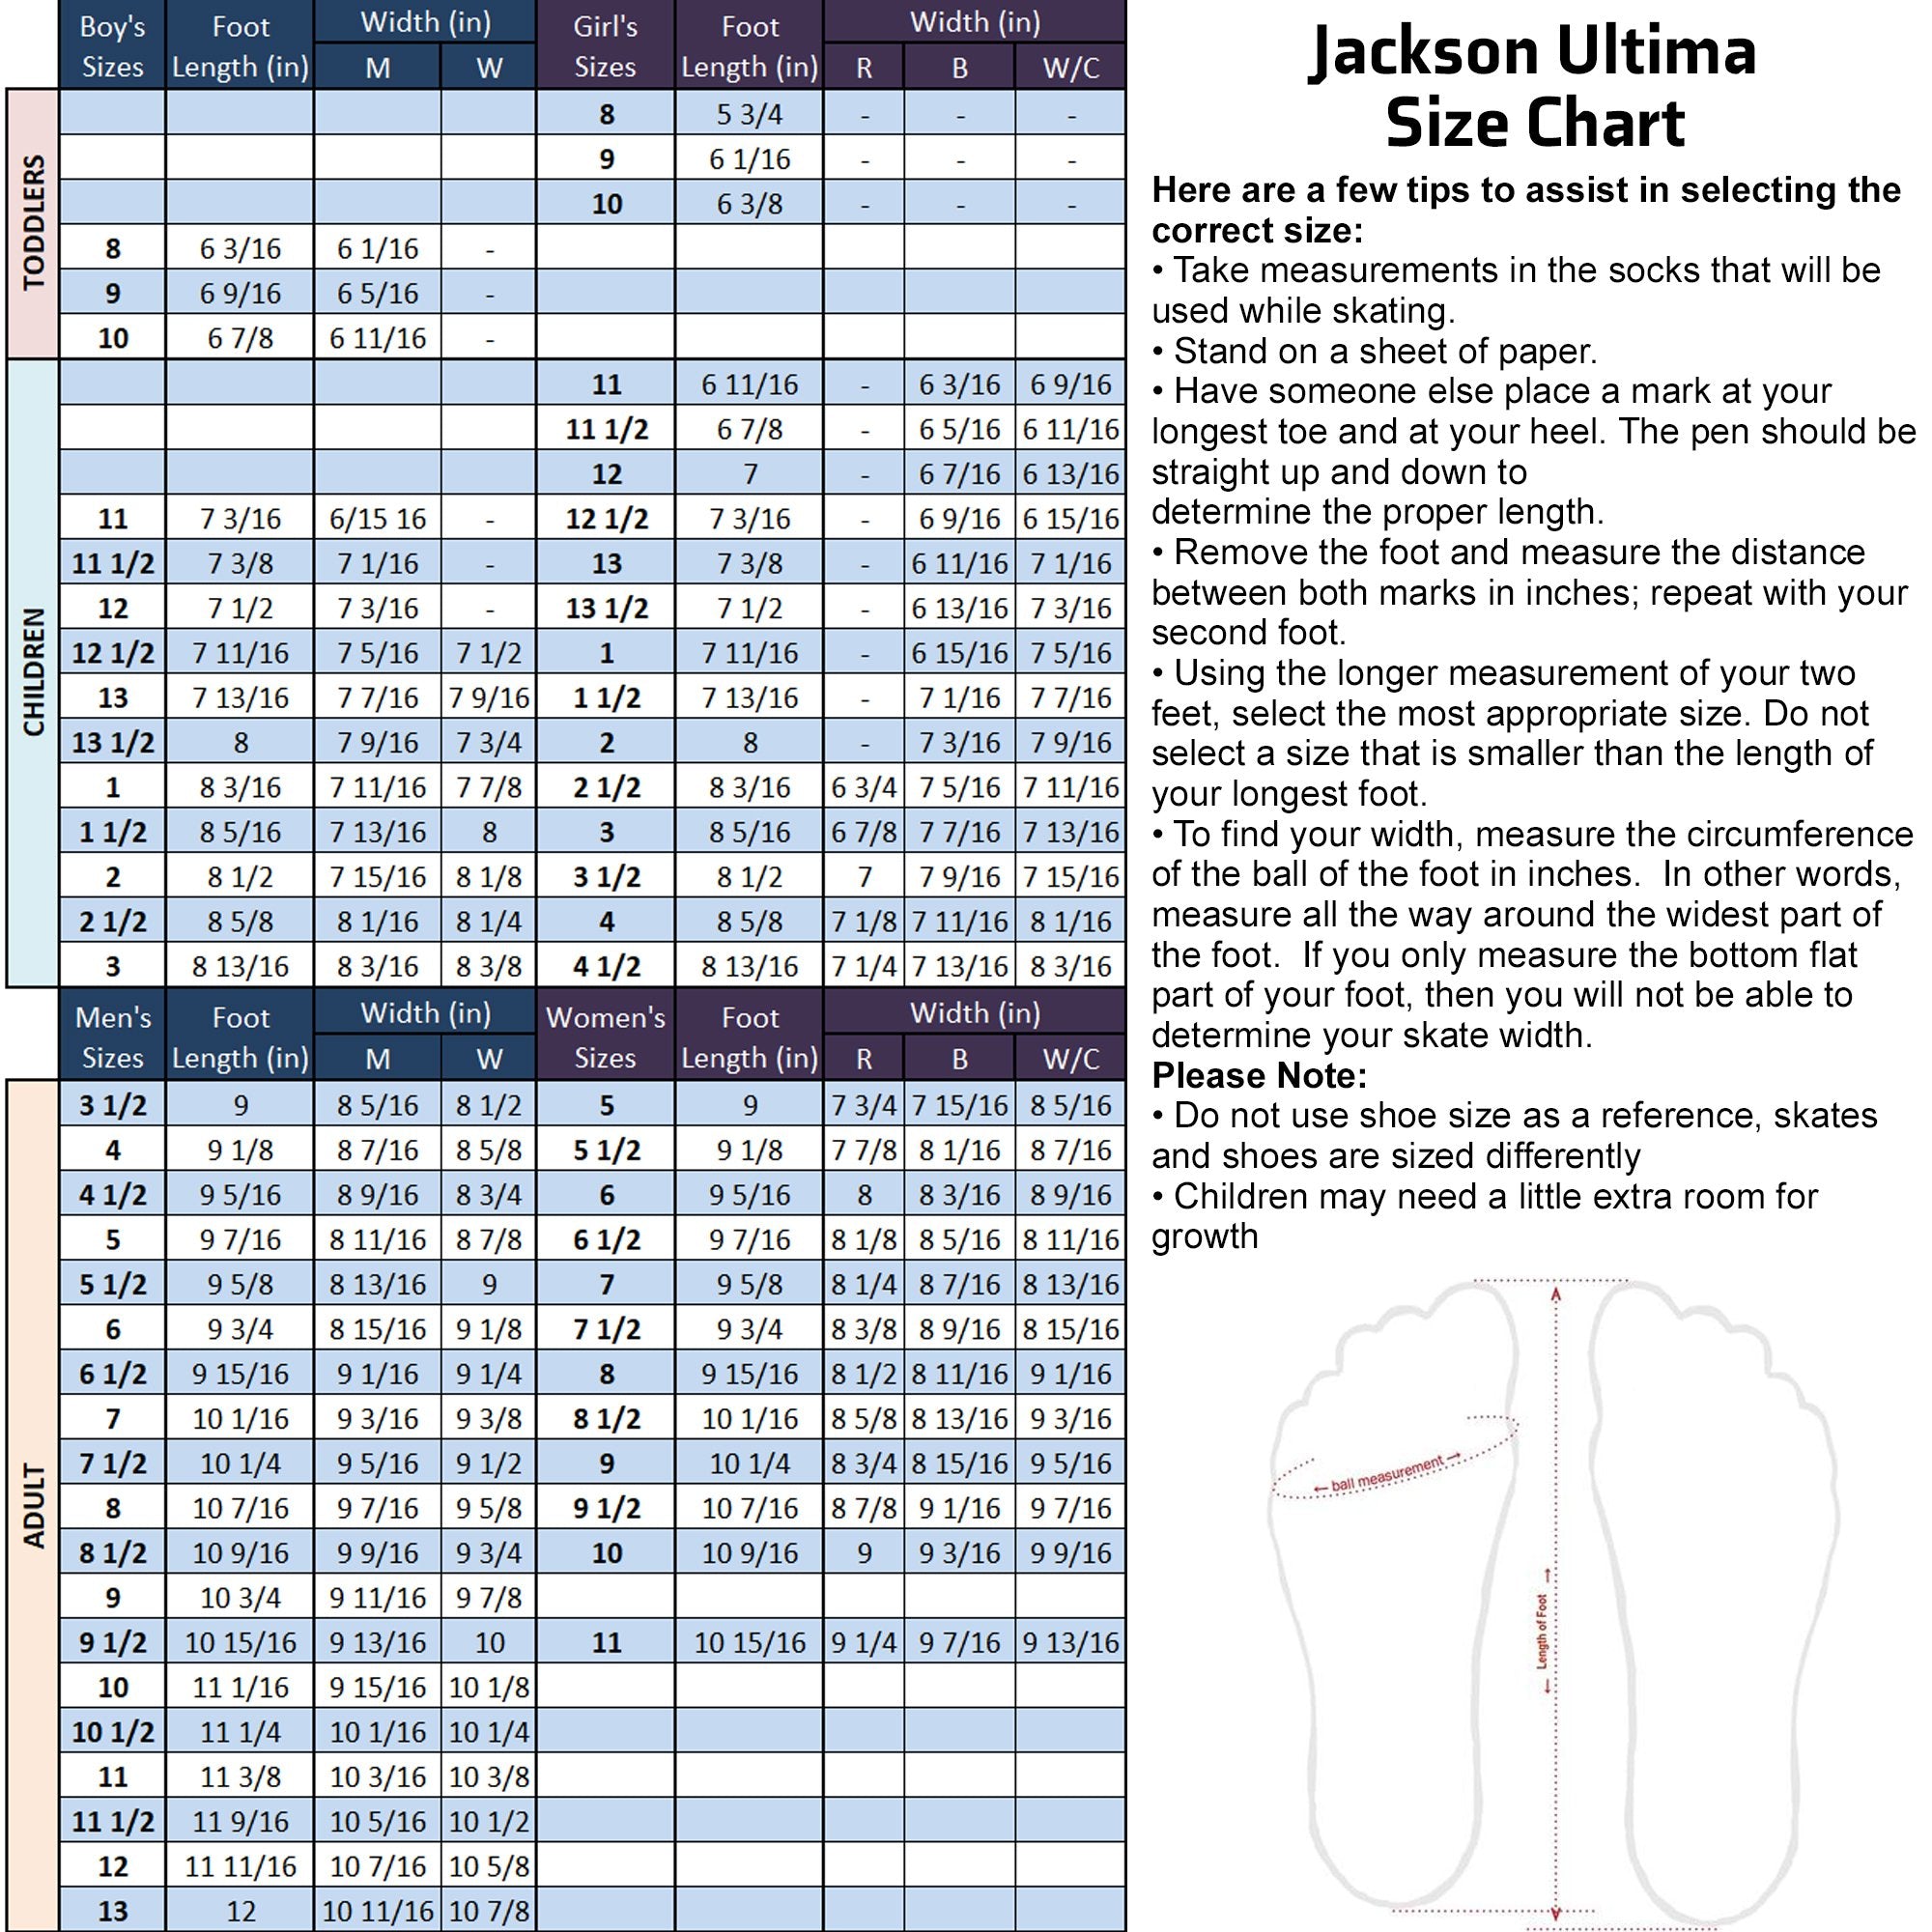 Jackson Ultima EVO white figure skate ultima Mark IV blade